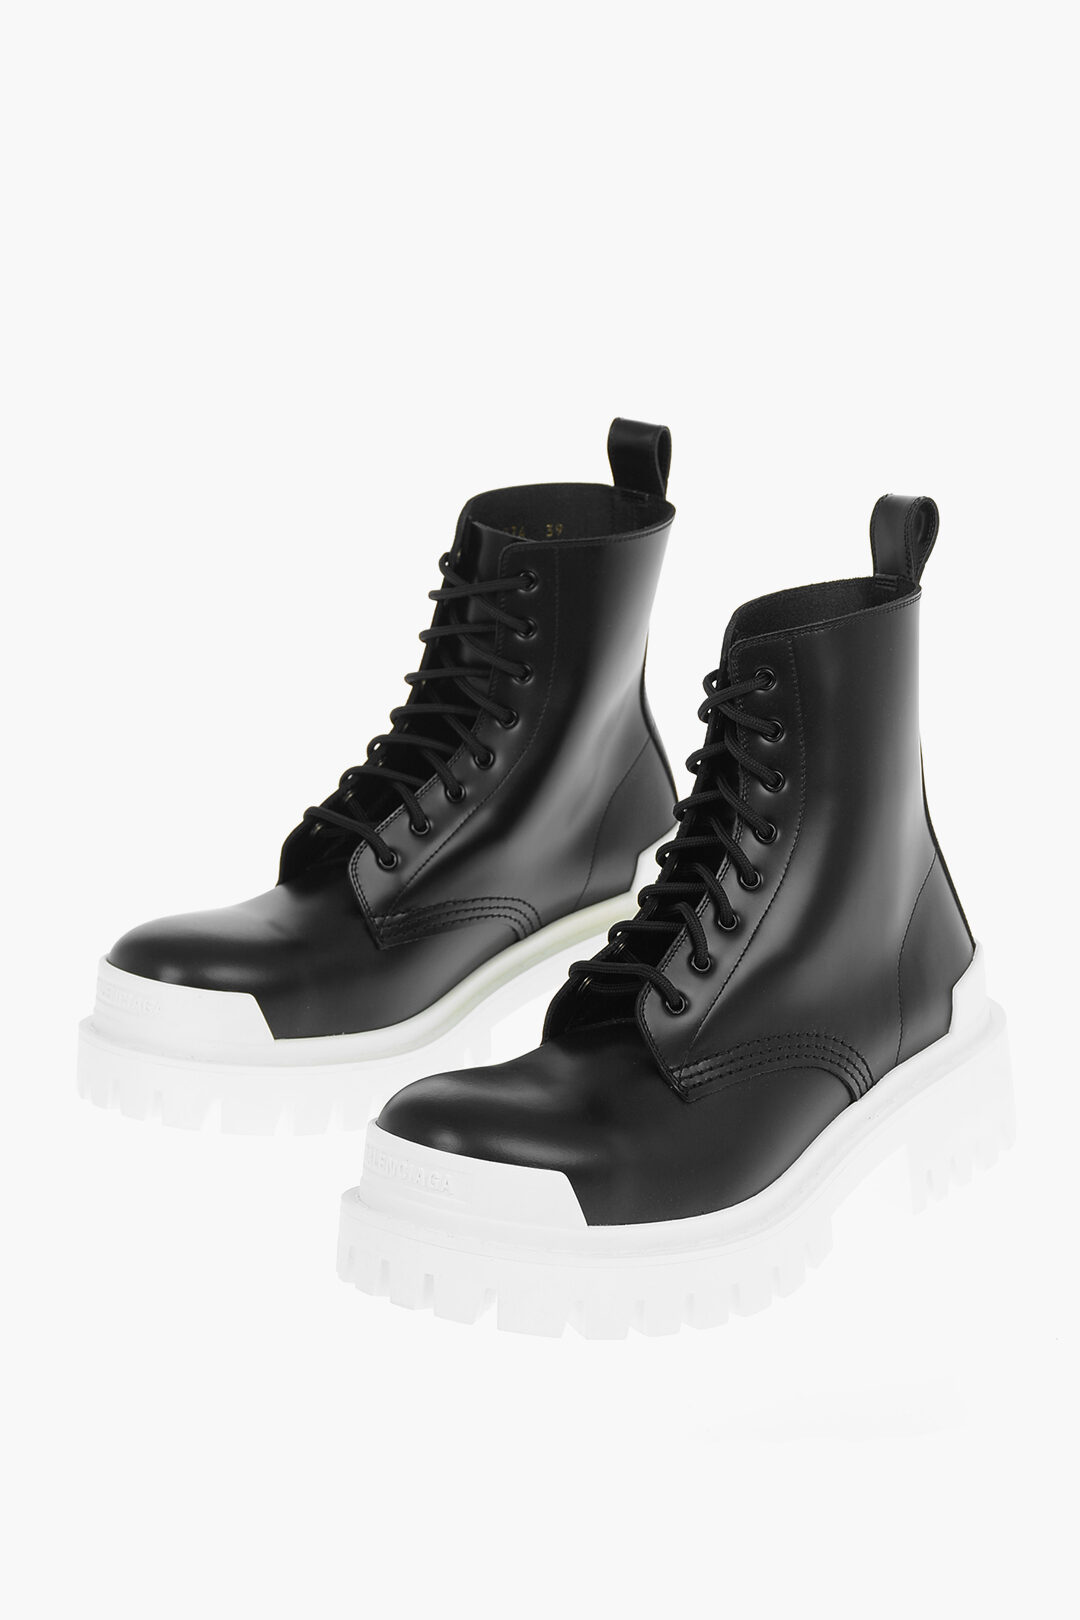 Balenciaga Boots  Men  131 products  FASHIOLAcom